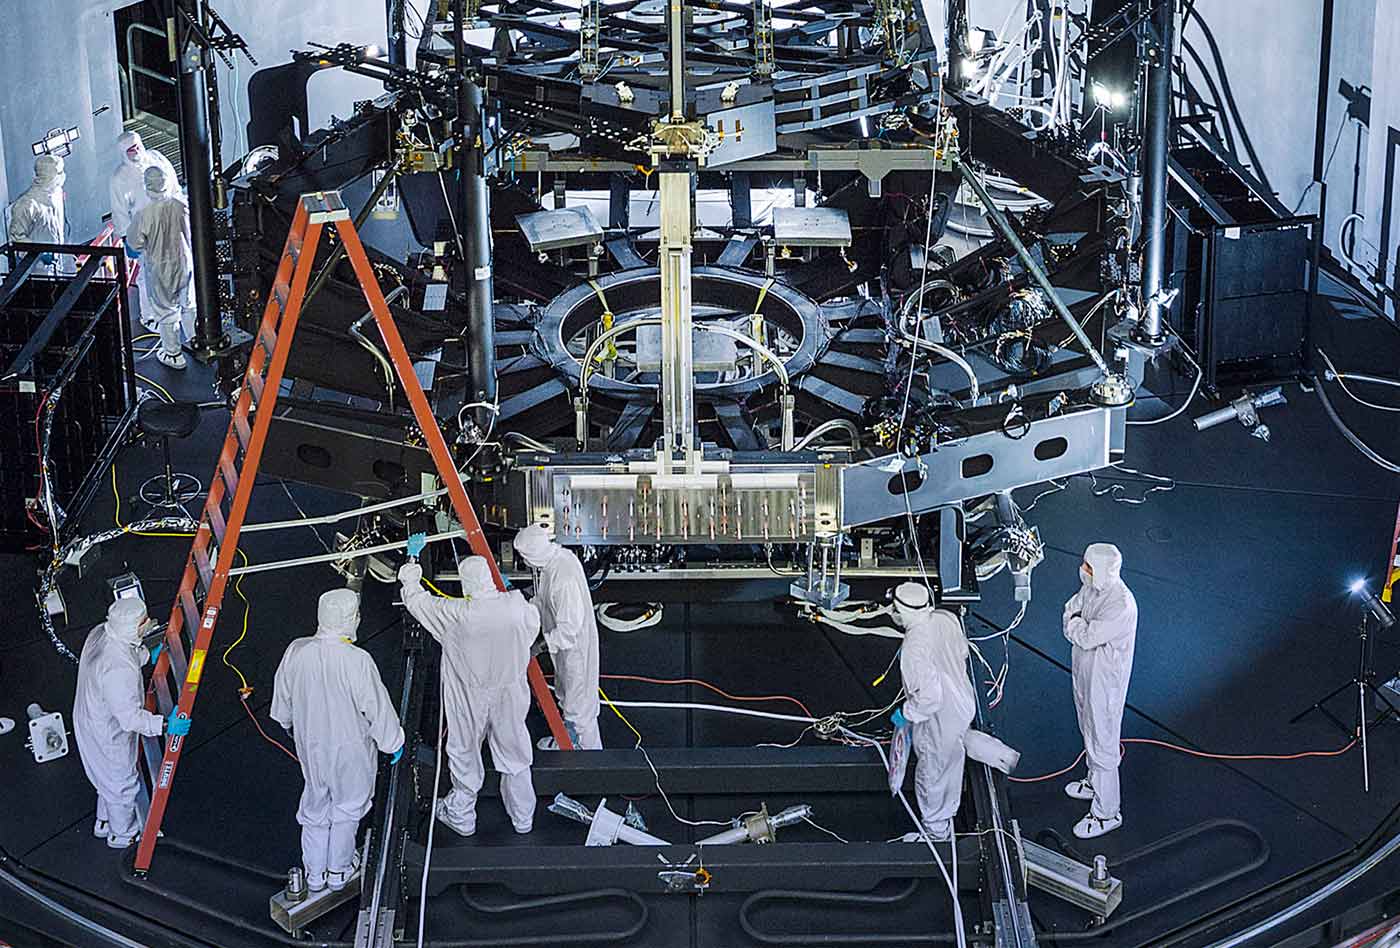 James Webb Space Telescope in NASA's giant thermal vacuum chamber